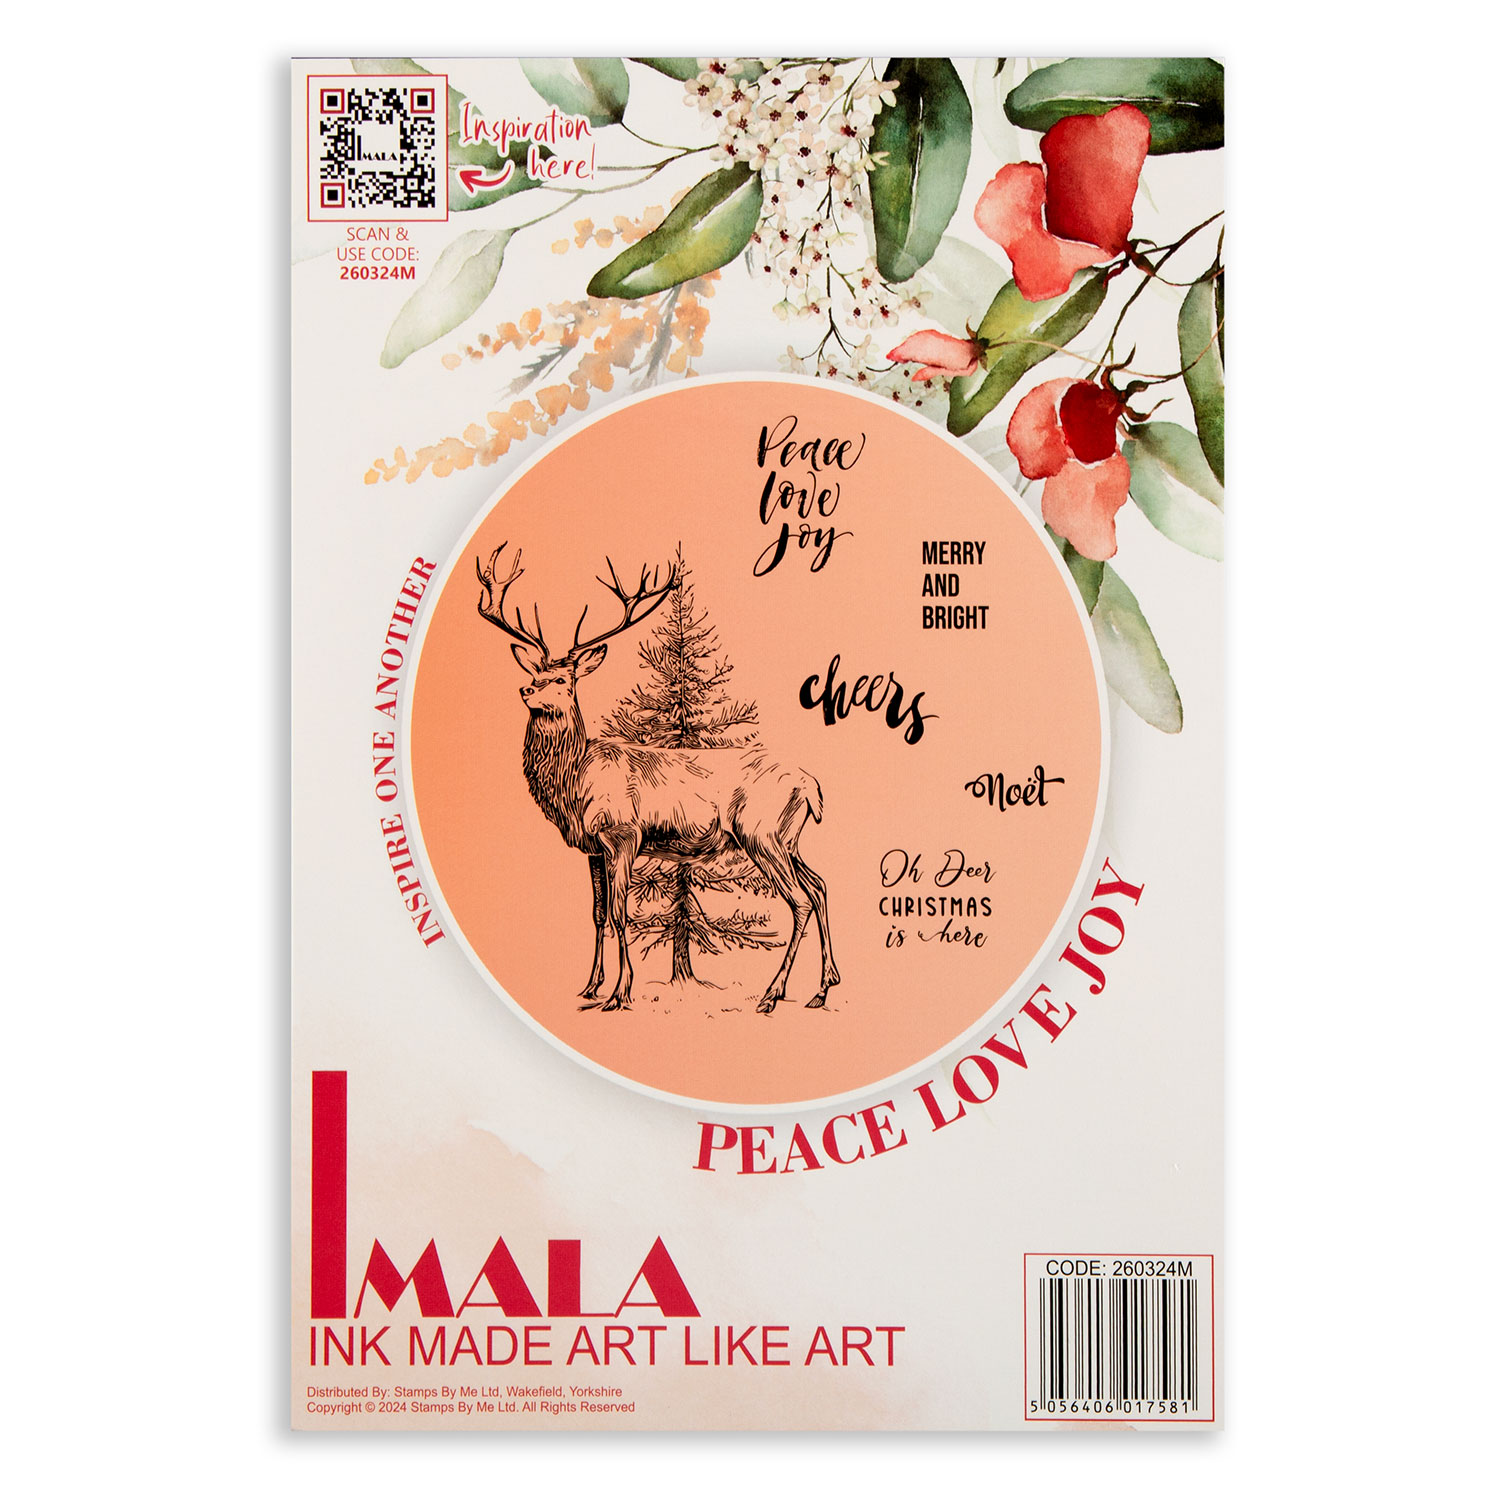 IMALA Chrismas Icons A5 Stamp Pick-n-Mix - Choose Any 3 - Peace Love Joy - 6 Stamps